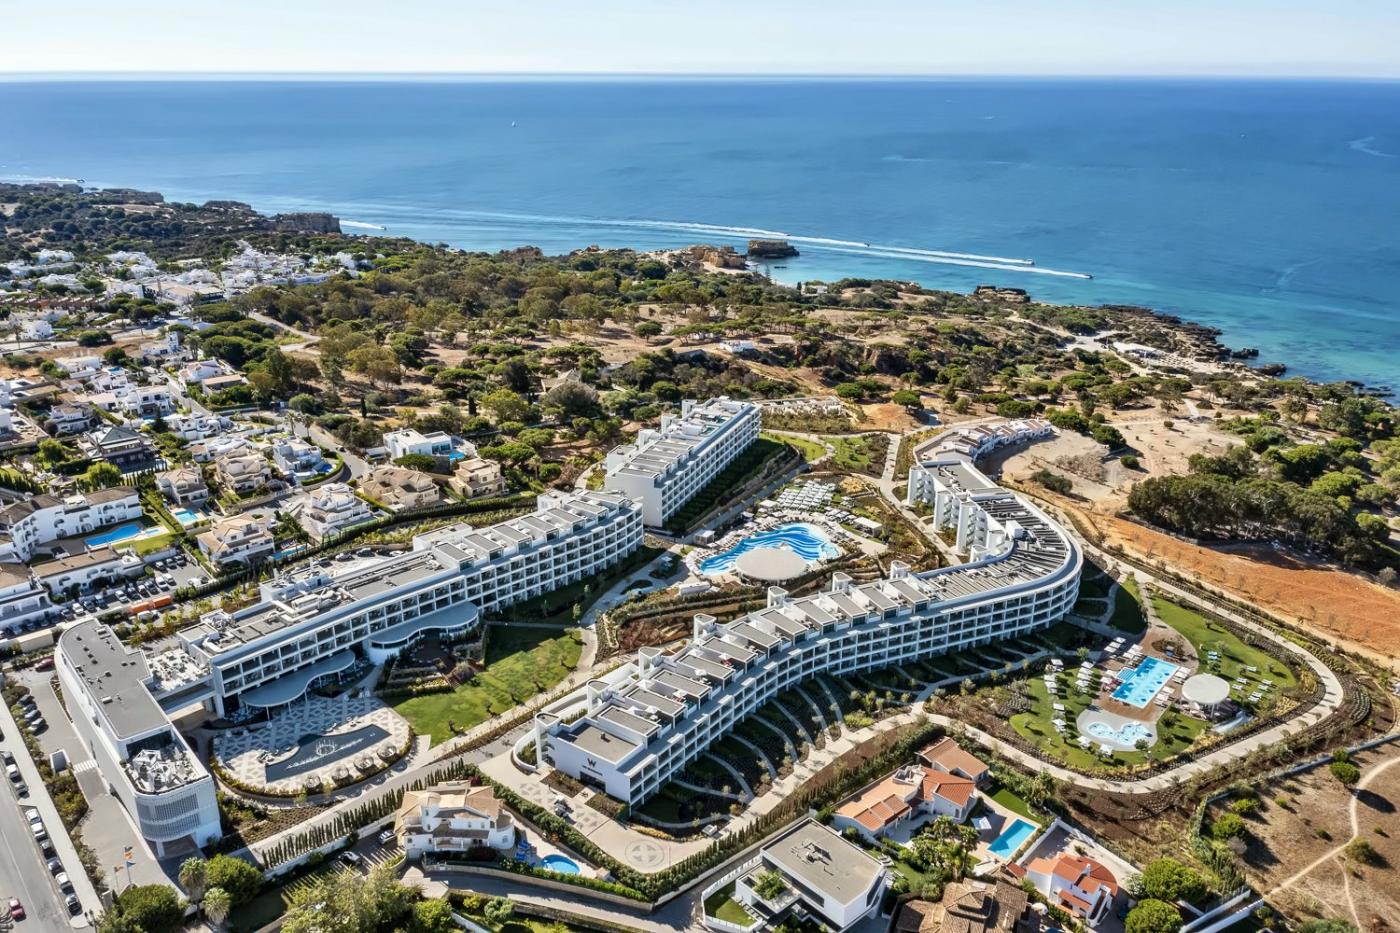 Hotel W Marriott en Algarve, Portugal  W Hotel Algarve, Portugal